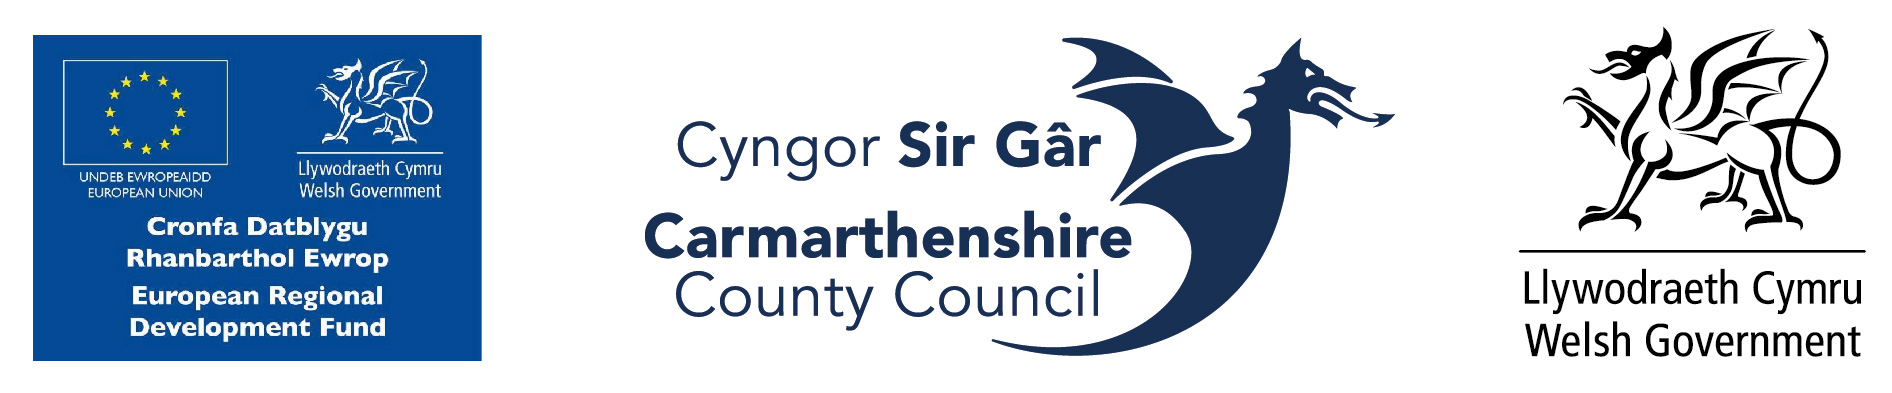 European regional development fund, Carmarthenshire County Council, Welsh Governement